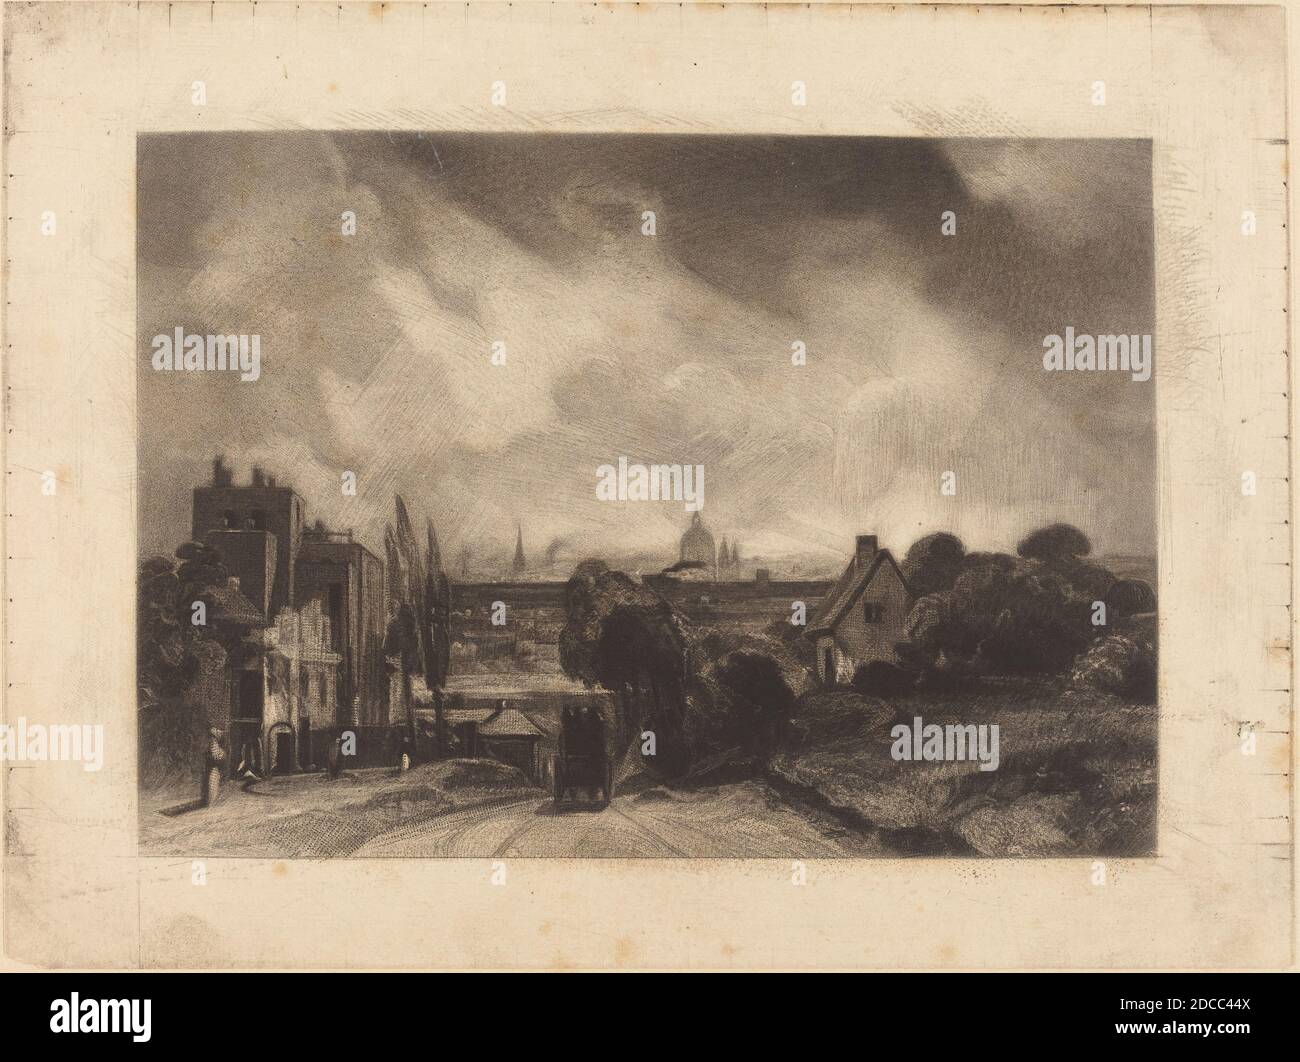 David Lucas, (artista), britannico, 1802 - 1881, John Constable, (artista dopo), inglese, 1776 - 1837, Sir Richard Steele's Cottages, pubblicato 1845, mezzotint Foto Stock